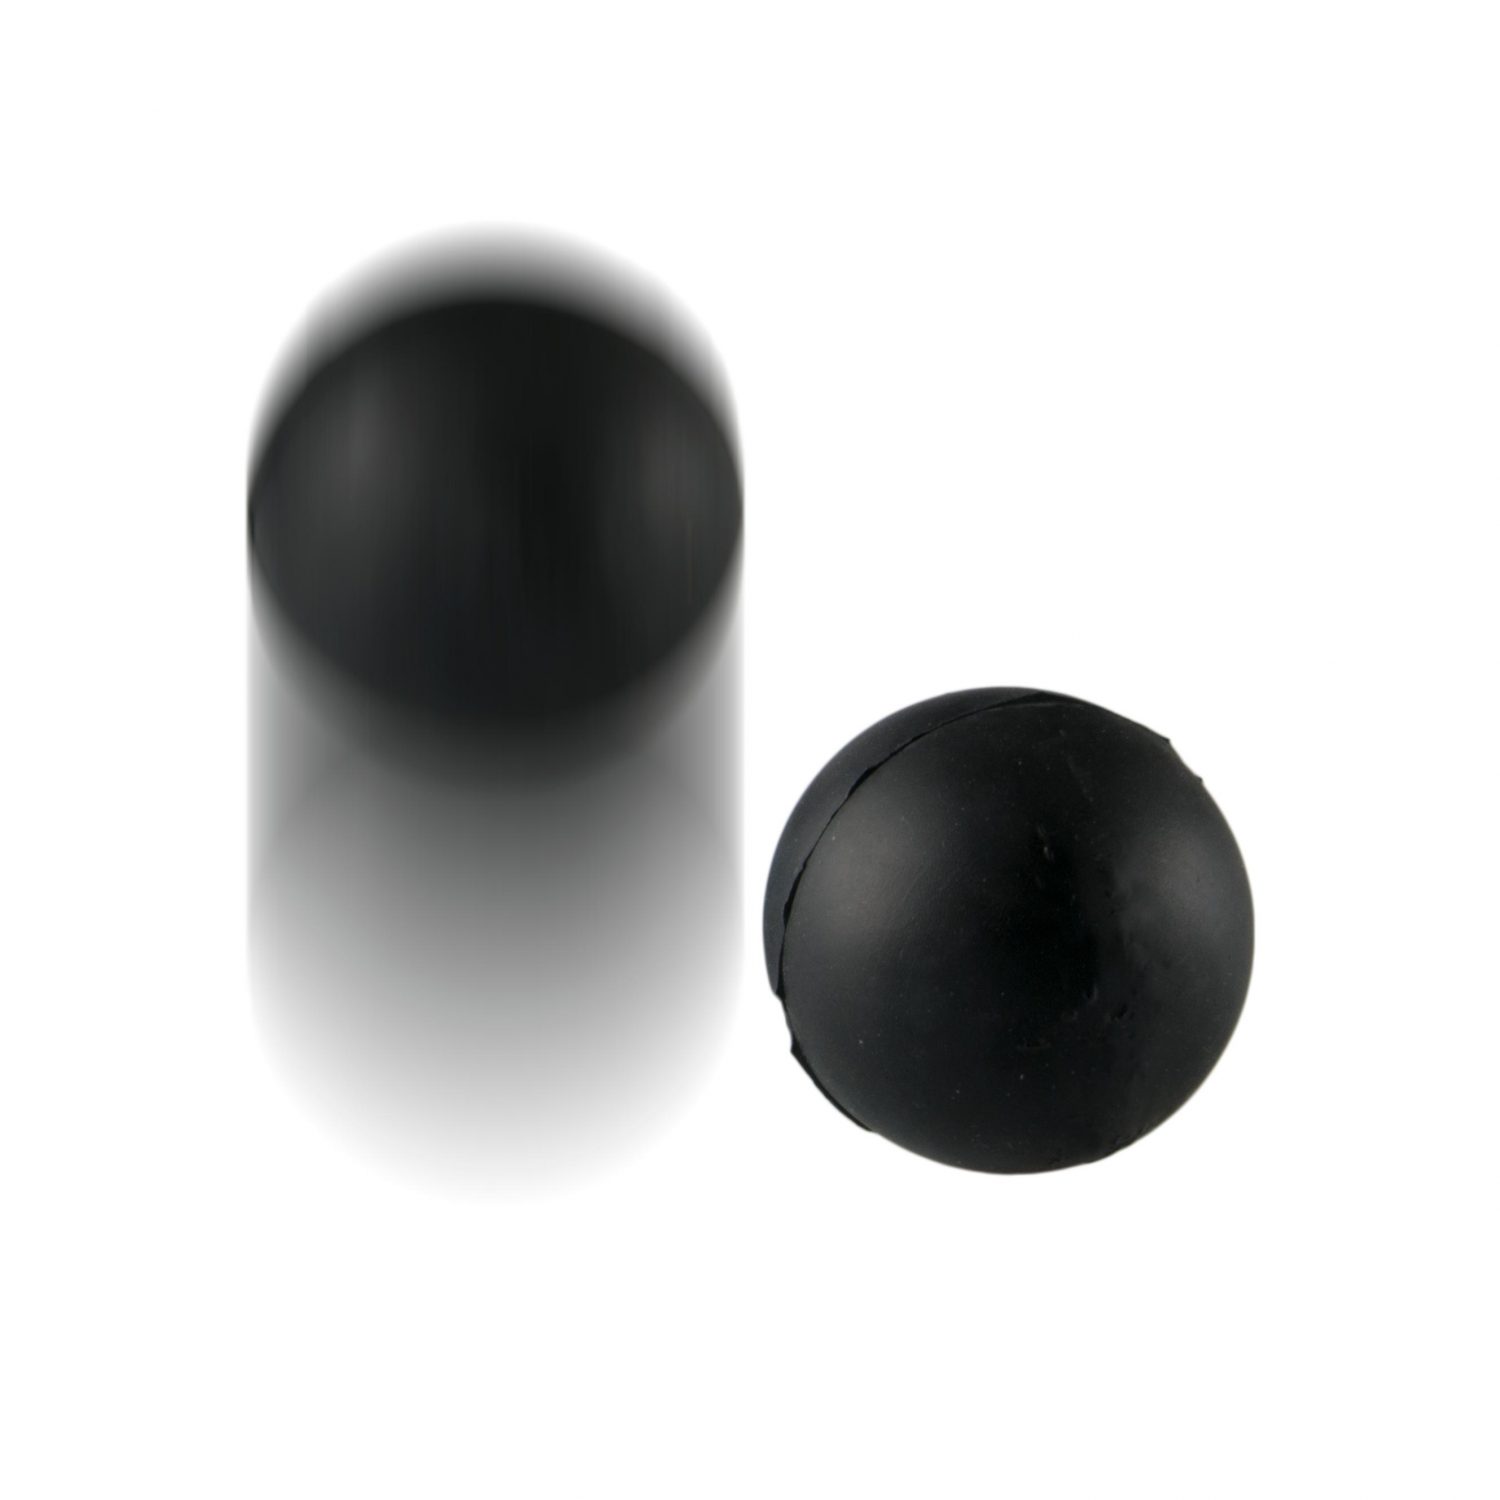 No Bounce Big Balls Magic Trick Props Accessories WA Black Rubber Bounce 